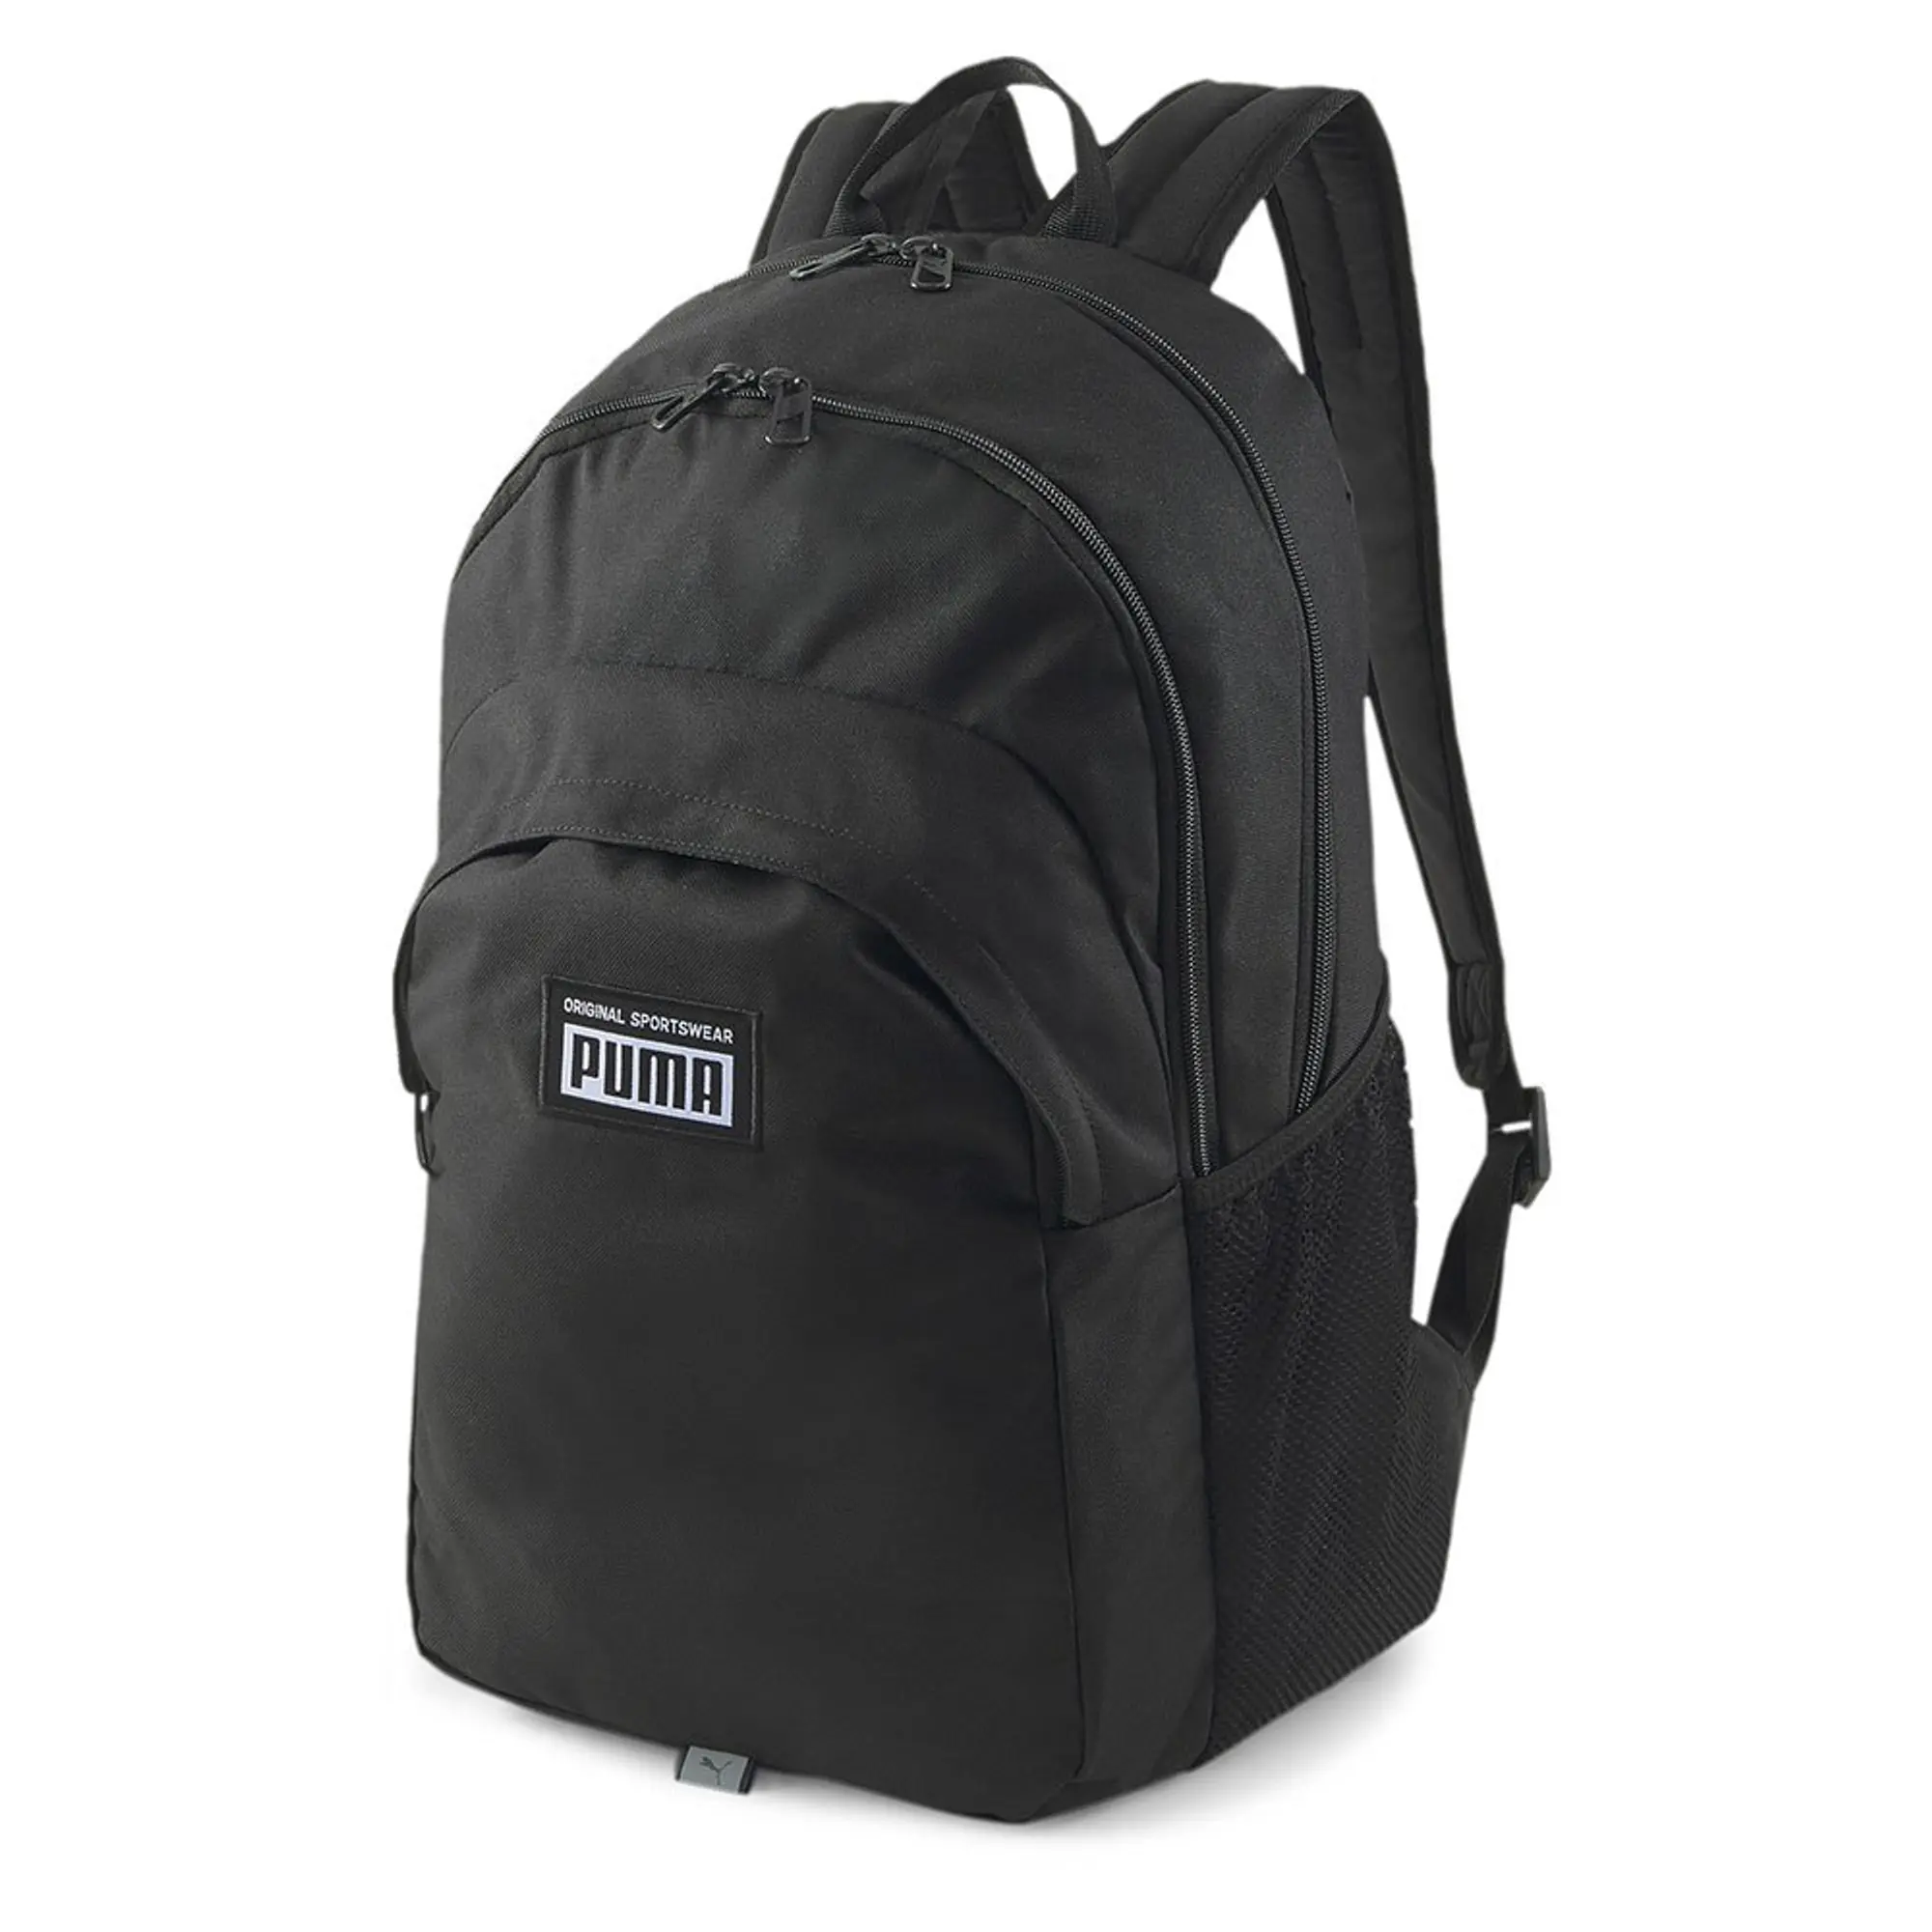 Puma Academy Backpack - Black